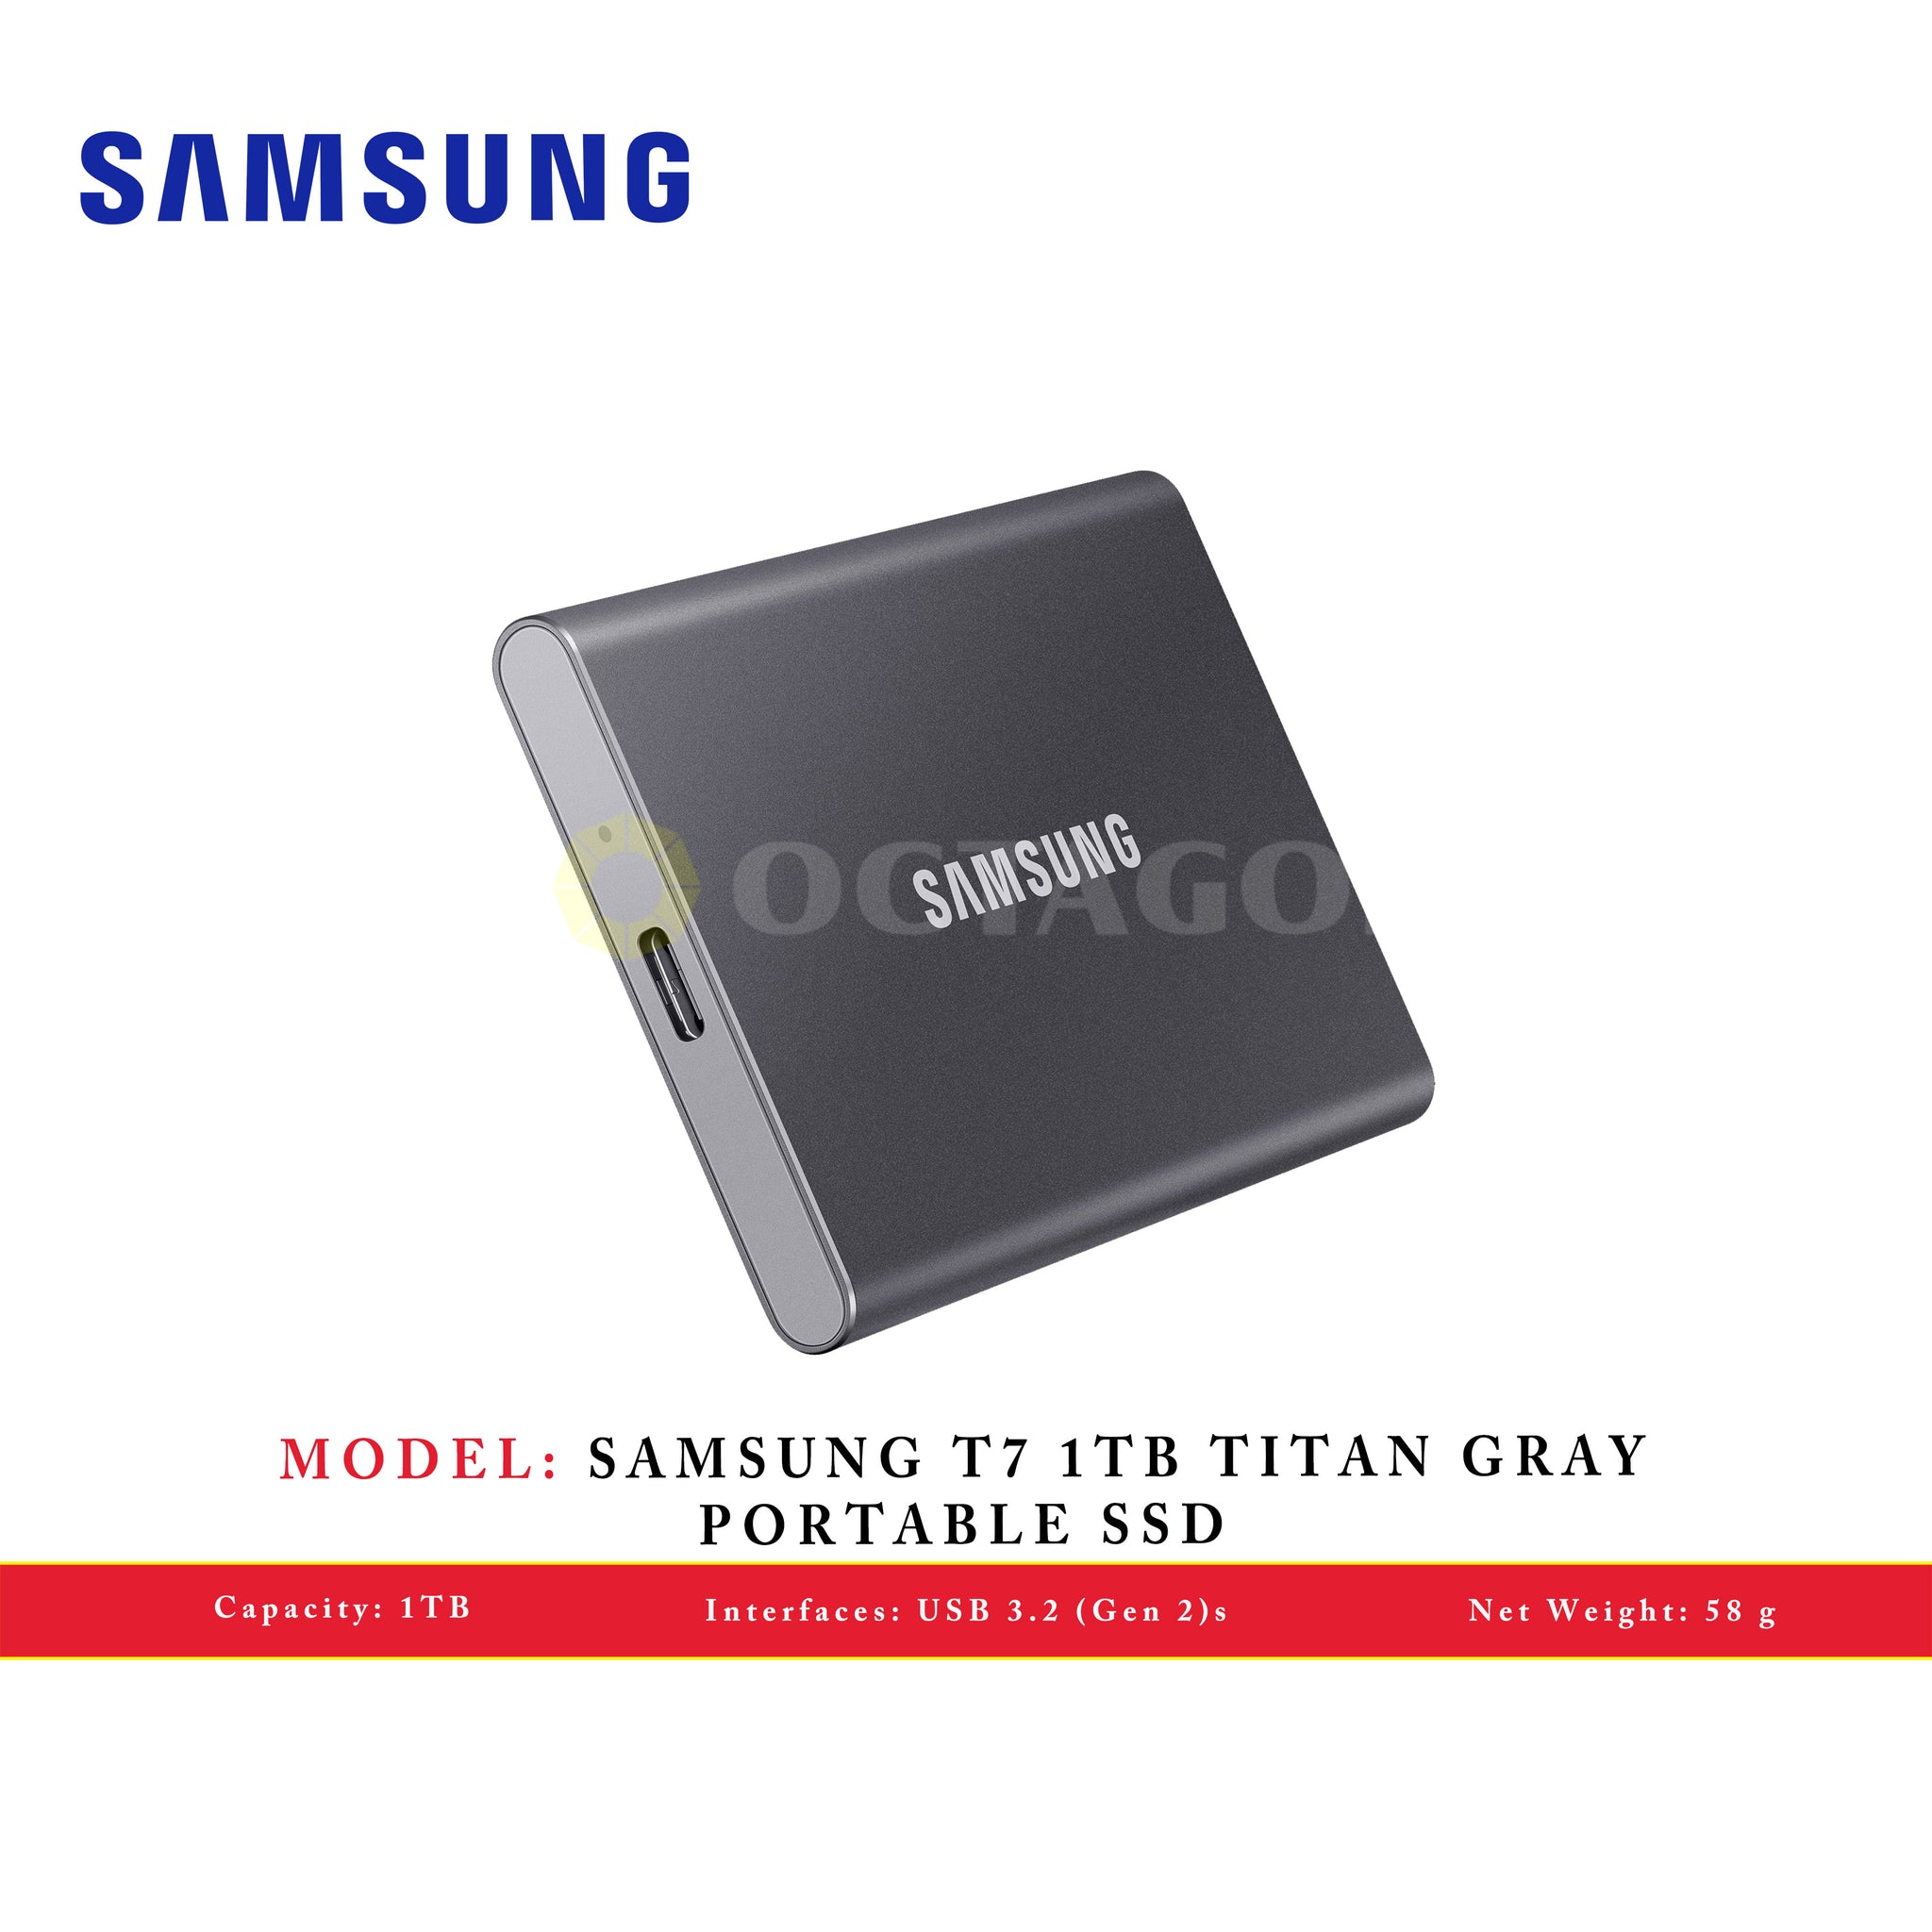 SAMSUNG T7 1TB TITAN GRAY PORTABLE SSD